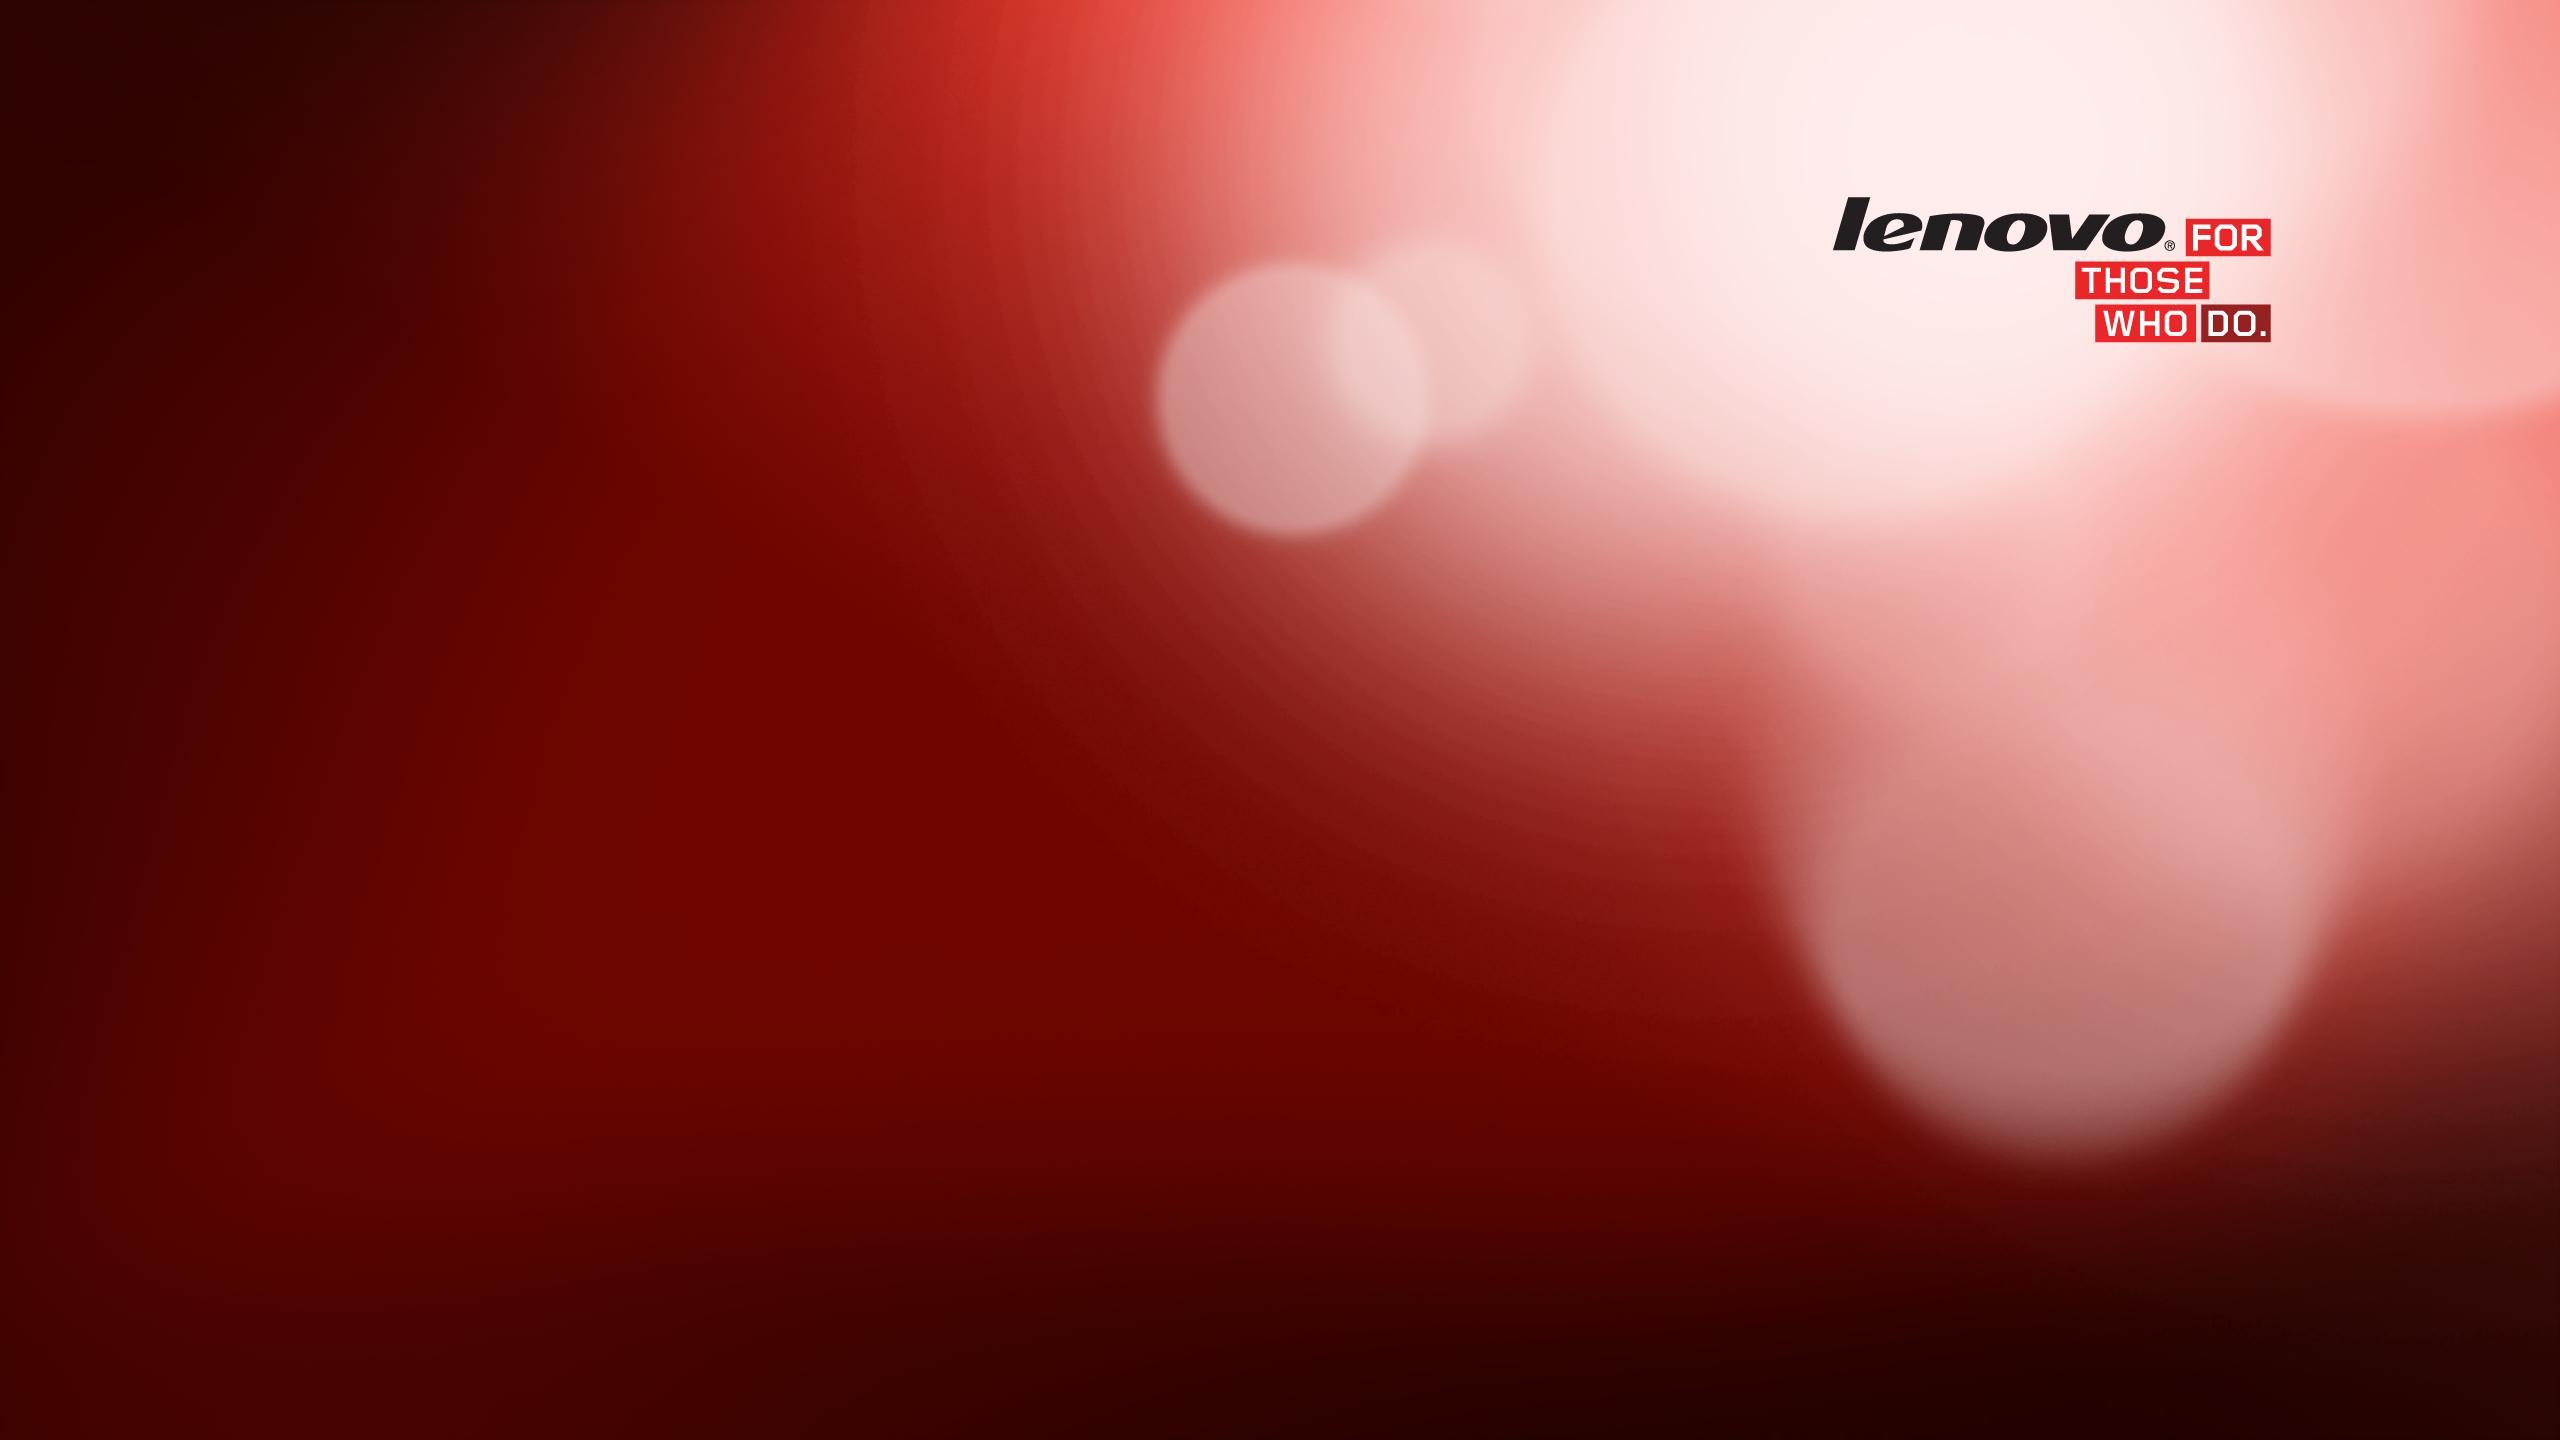 Lenovo Hd Wallpapers Top Free Lenovo Hd Backgrounds Wallpaperaccess